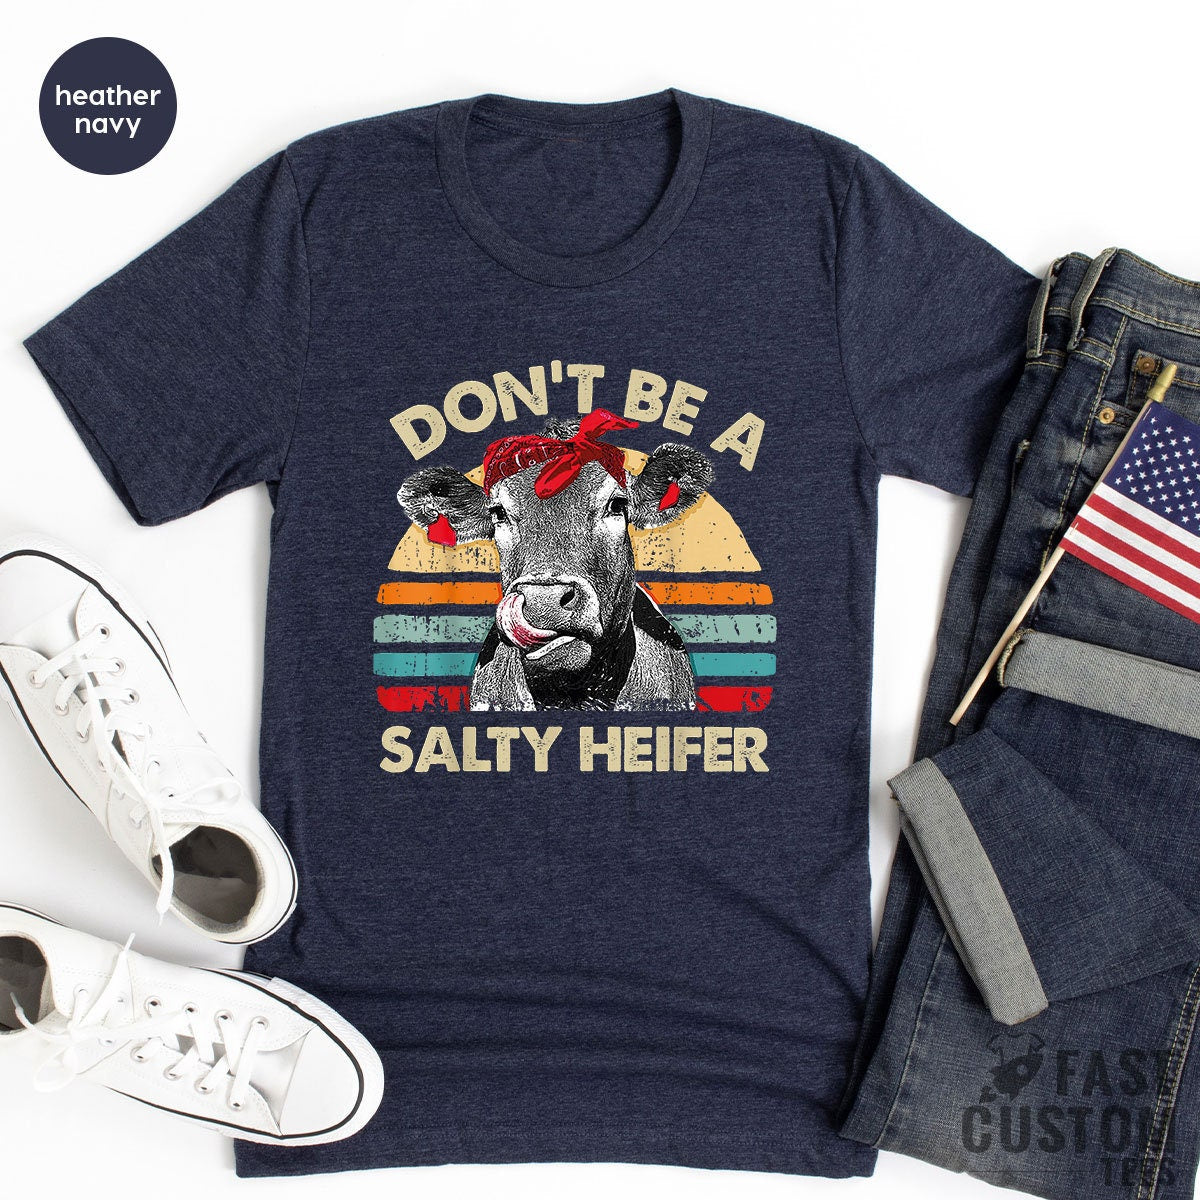 Don't Be A Salty Heifer Shirt, Sassy Cow Tshirt, Retro Sarcastic T Shirt, Funny Cow Lover Shirt, Crazy Heifer T-Shirt, Vintage Farm Shirt - Fastdeliverytees.com